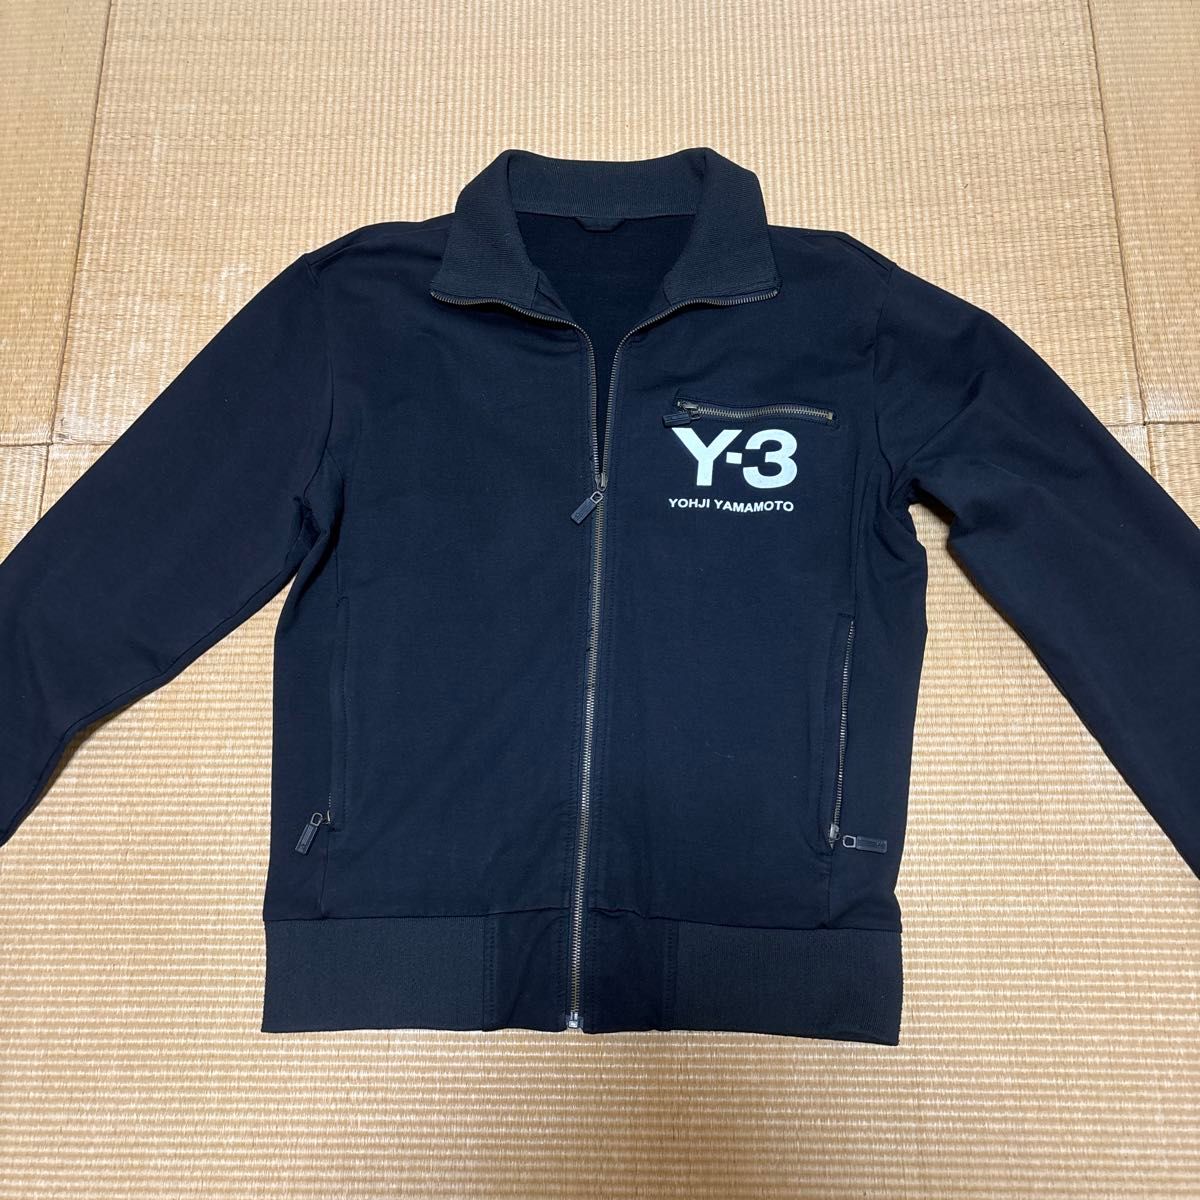 Y-3 YOHJI YAMAMOTO  ジップアップ　ジャケット　 ブラック　サイズL 中古品です